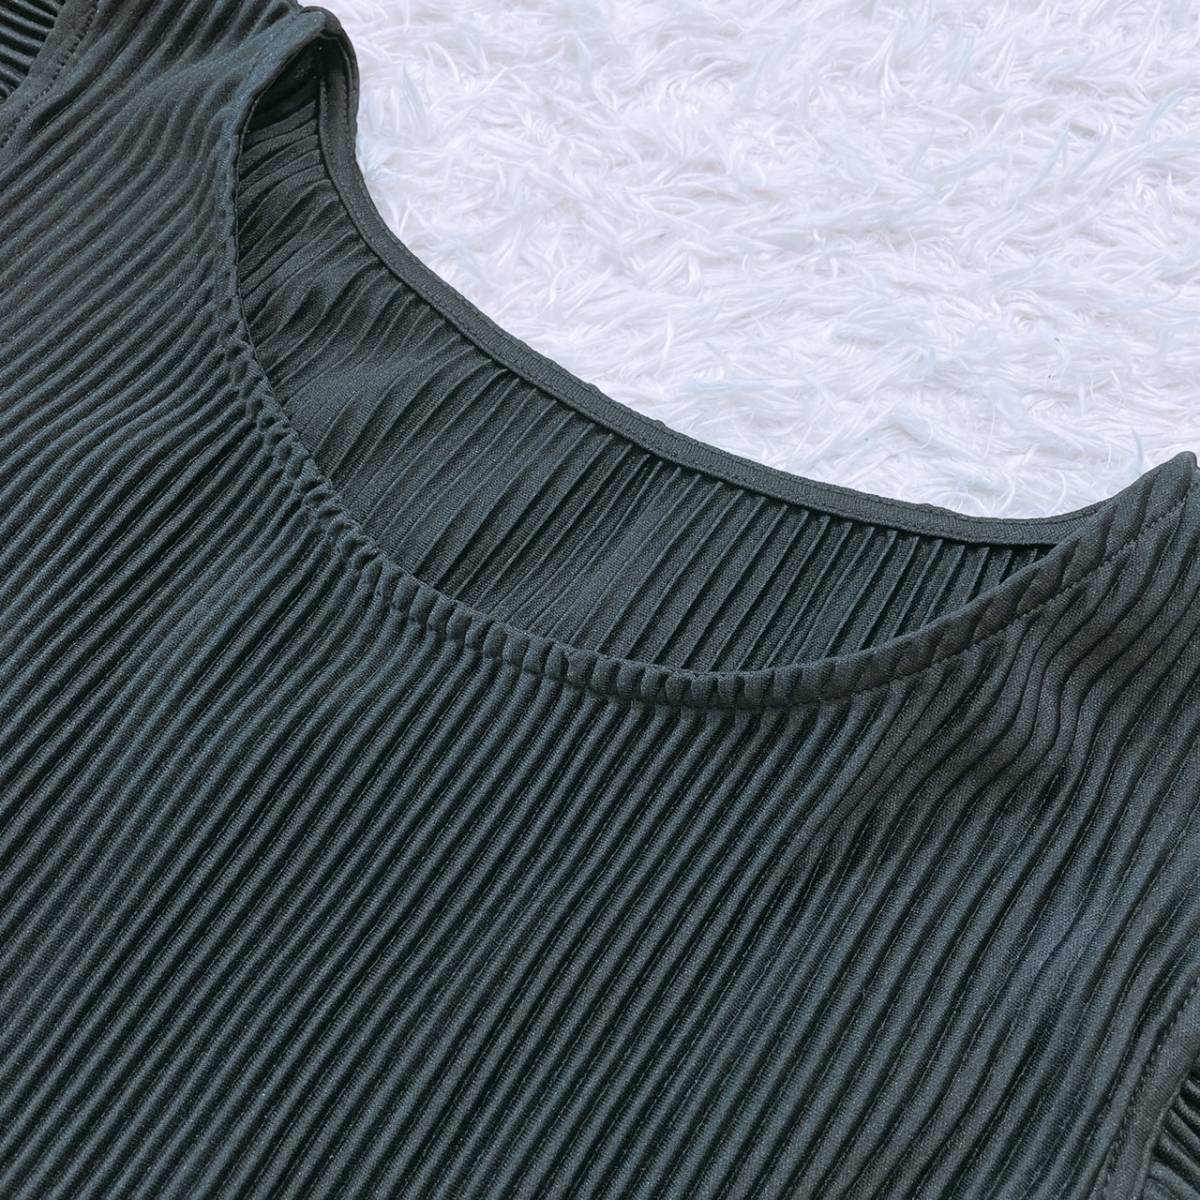 【20340】 2PINK ツーピンク トップス シャツ 半袖シャツ フラッタースリーブ 丸ネック フリル袖 コーデュロイ風 ブラック 黒 M